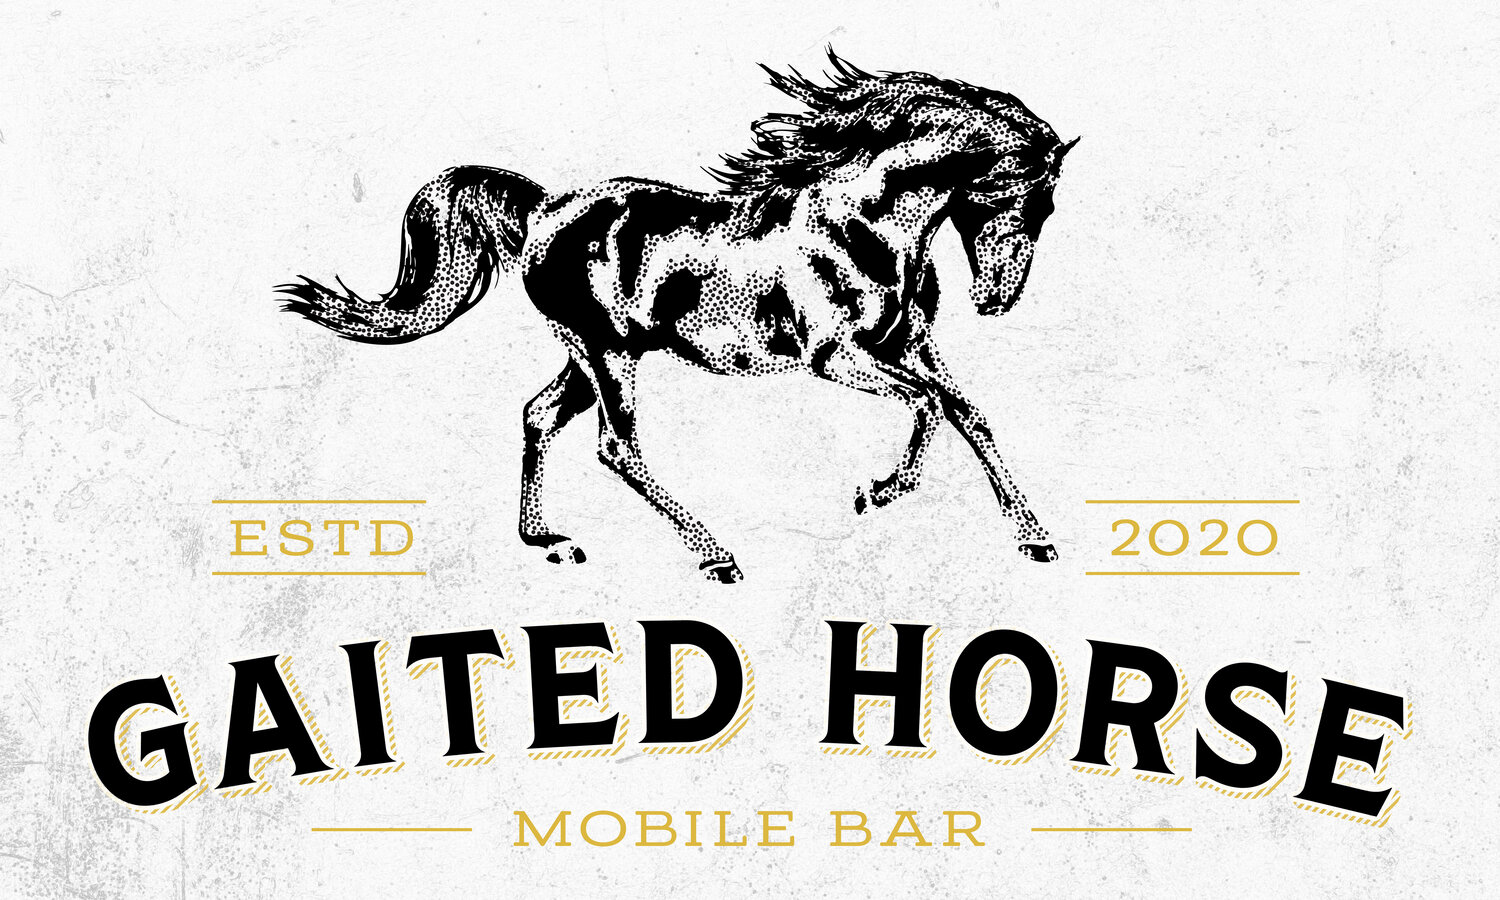 Gaited Horse Mobile Bar, Inc.